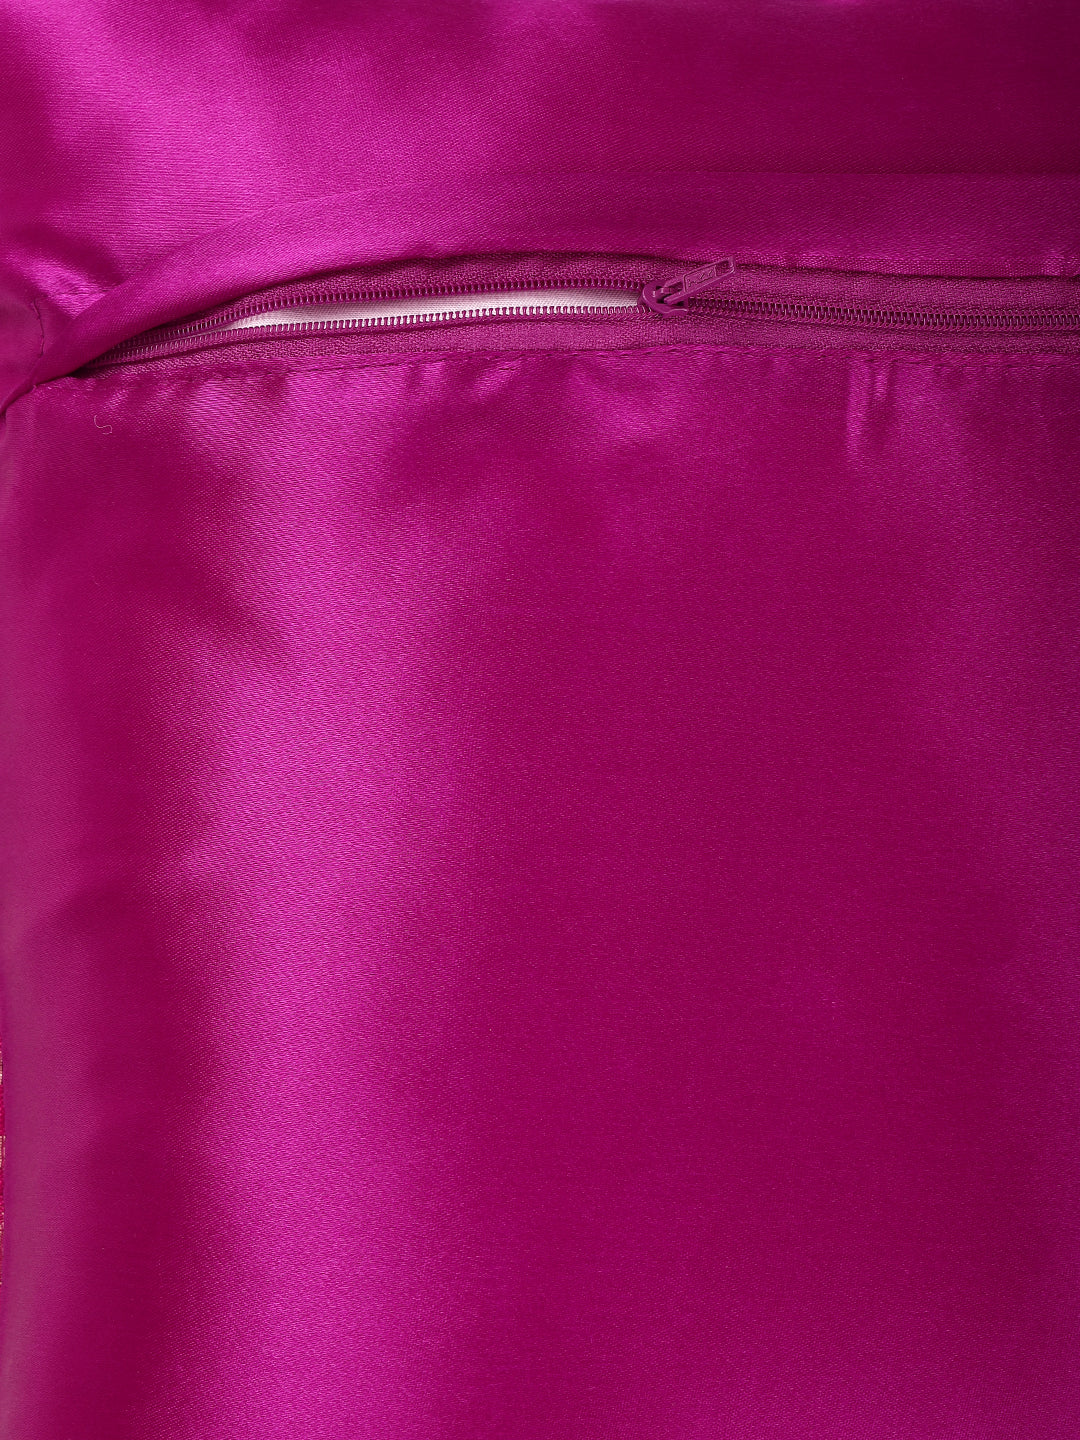 Silkfab Set 0f 5 Decorative Silk Cushion Covers (16x16) Flame Fuchsia - SILKFAB